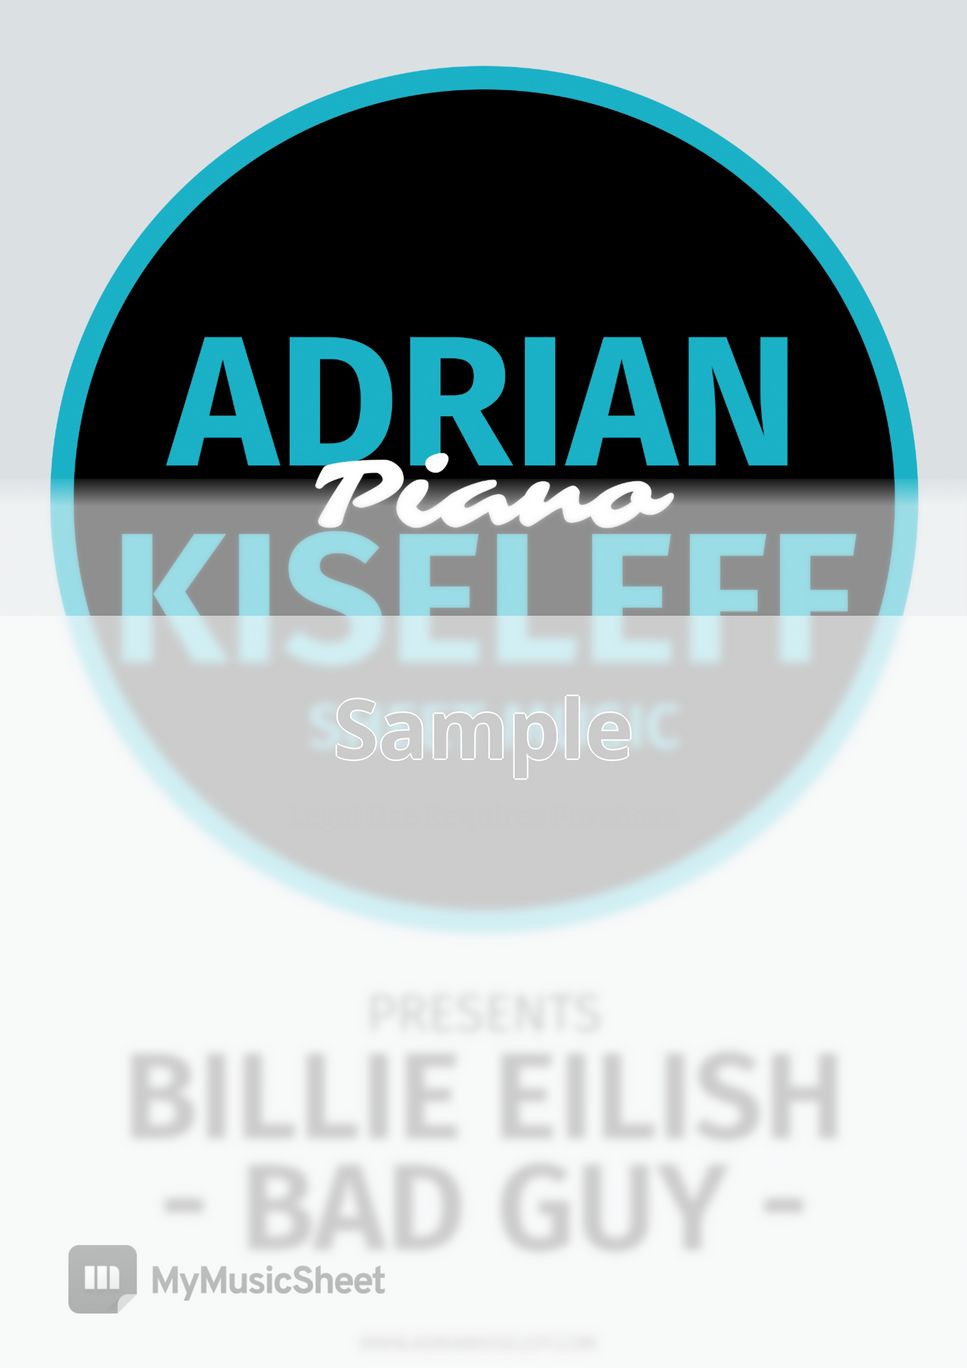 Billie Eilish - Bad Guy (For Piano Solo) by Adrian Kiseleff